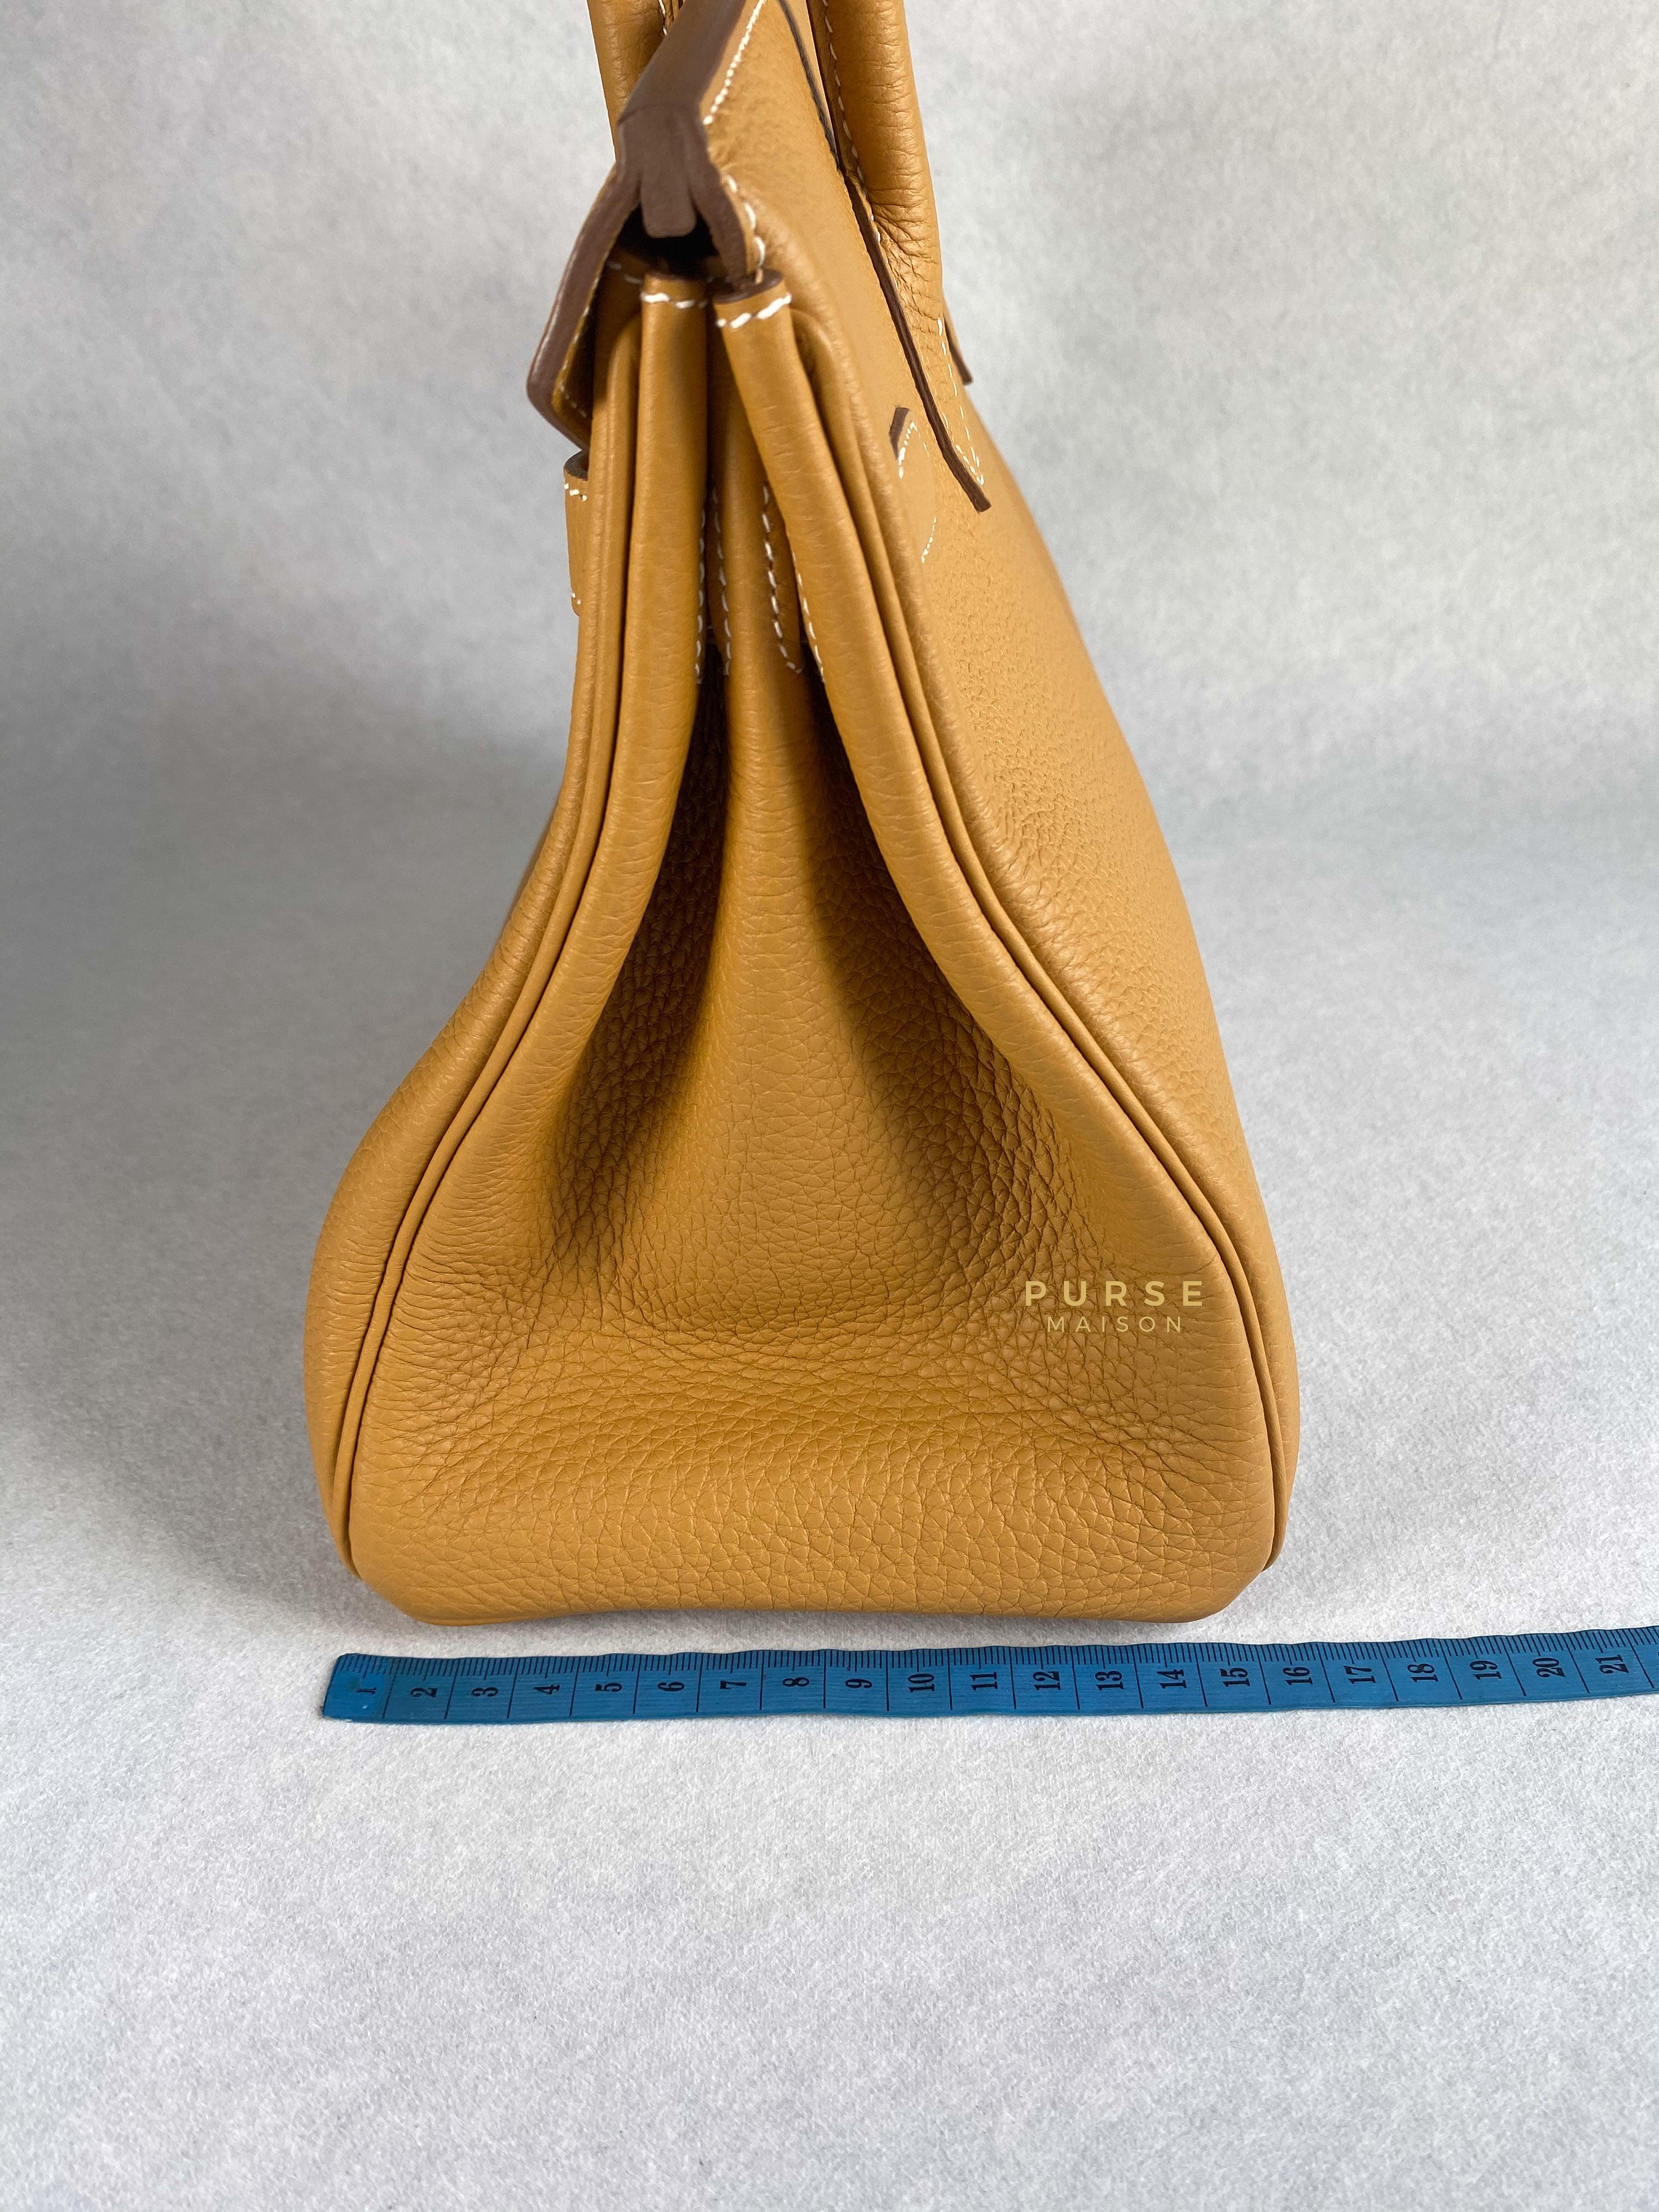 Hermes Birkin 30 Naturel Sable Togo and Palladium Hardware (Stamp B) | Purse Maison Luxury Bags Shop